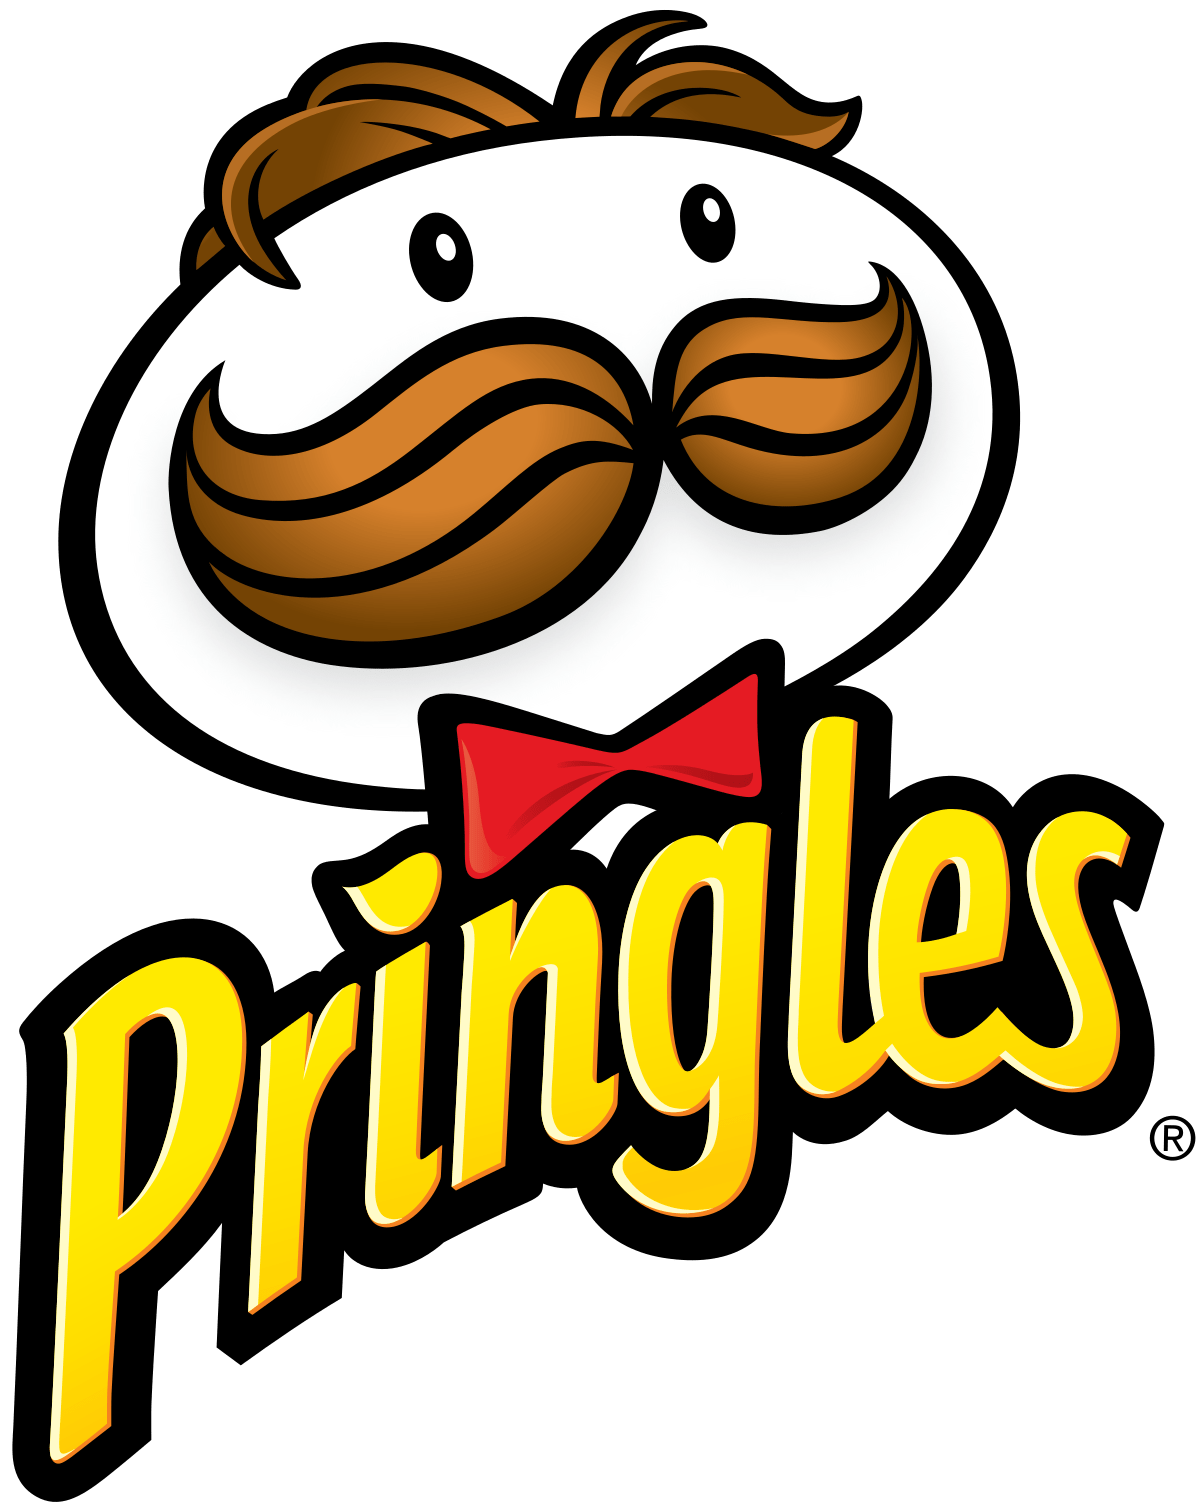 Pringles Logo Png & Free 